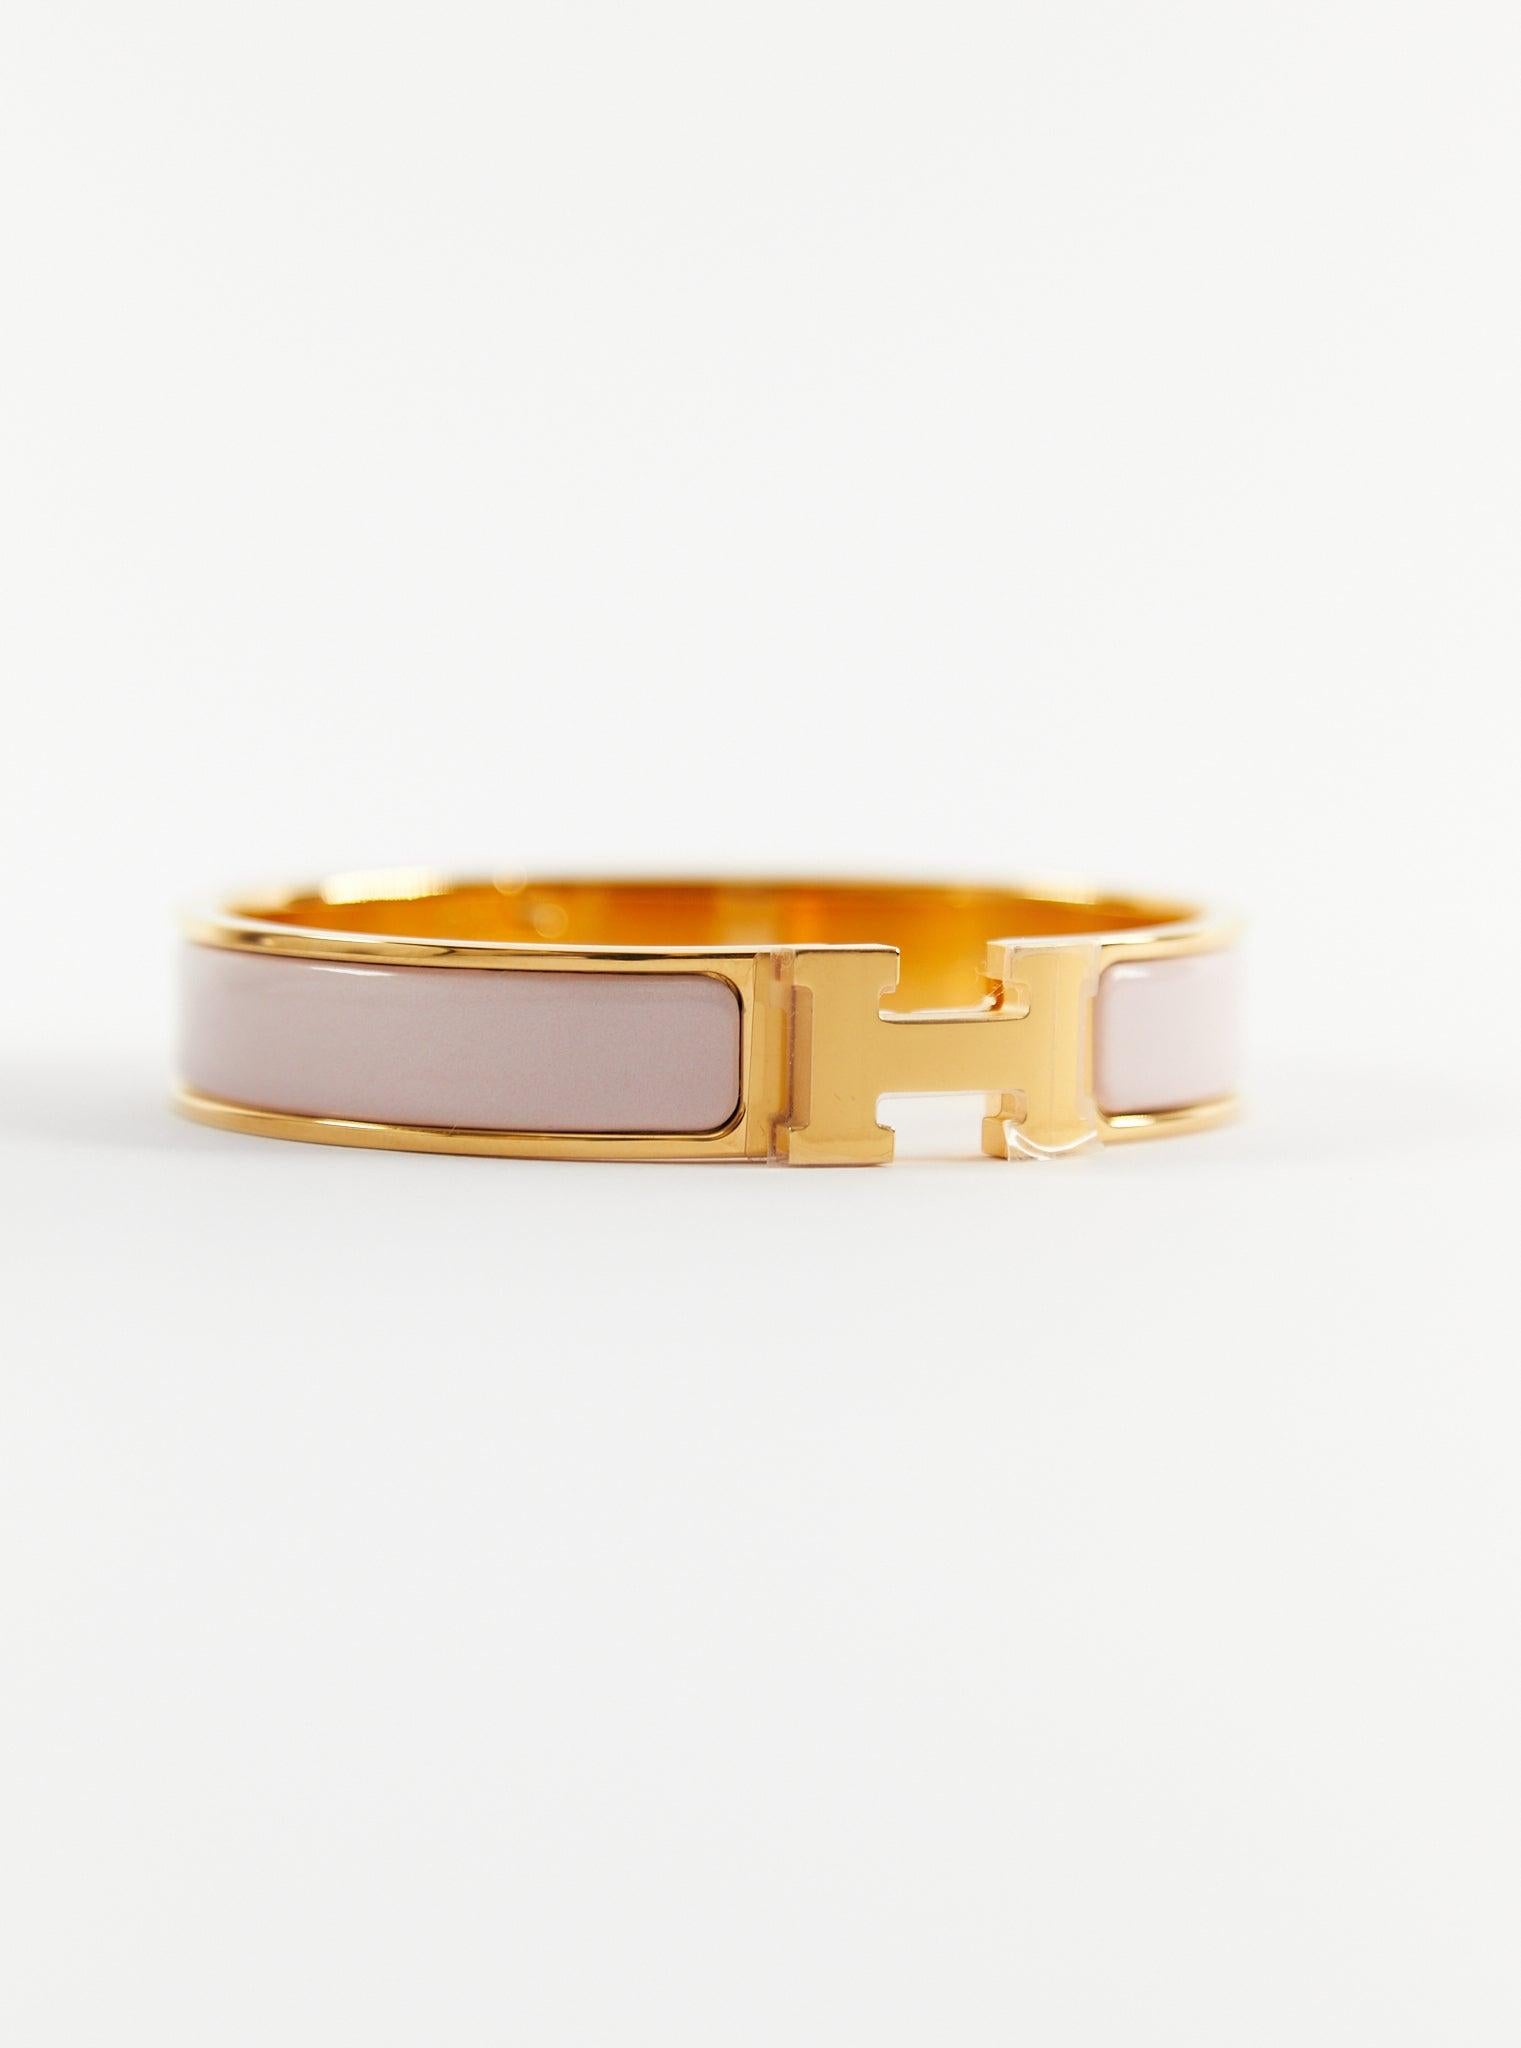 Hermès Clic H PM Bracelet in Rose Candeur & Gold

Wrist size: 16.8 cm  Width: 12 mm

Made in France